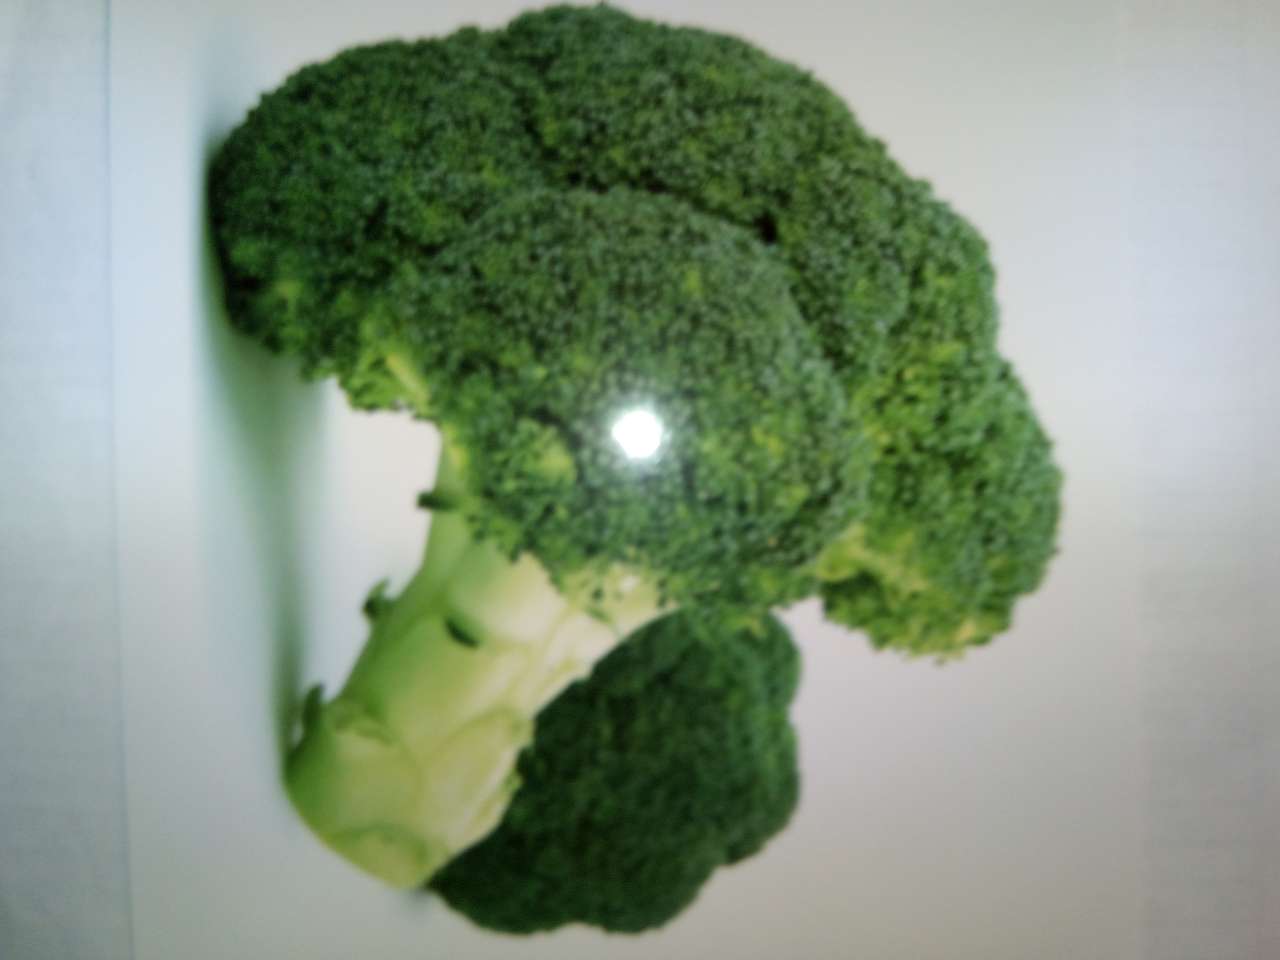 Puzzle " Broccoli" puzzle online